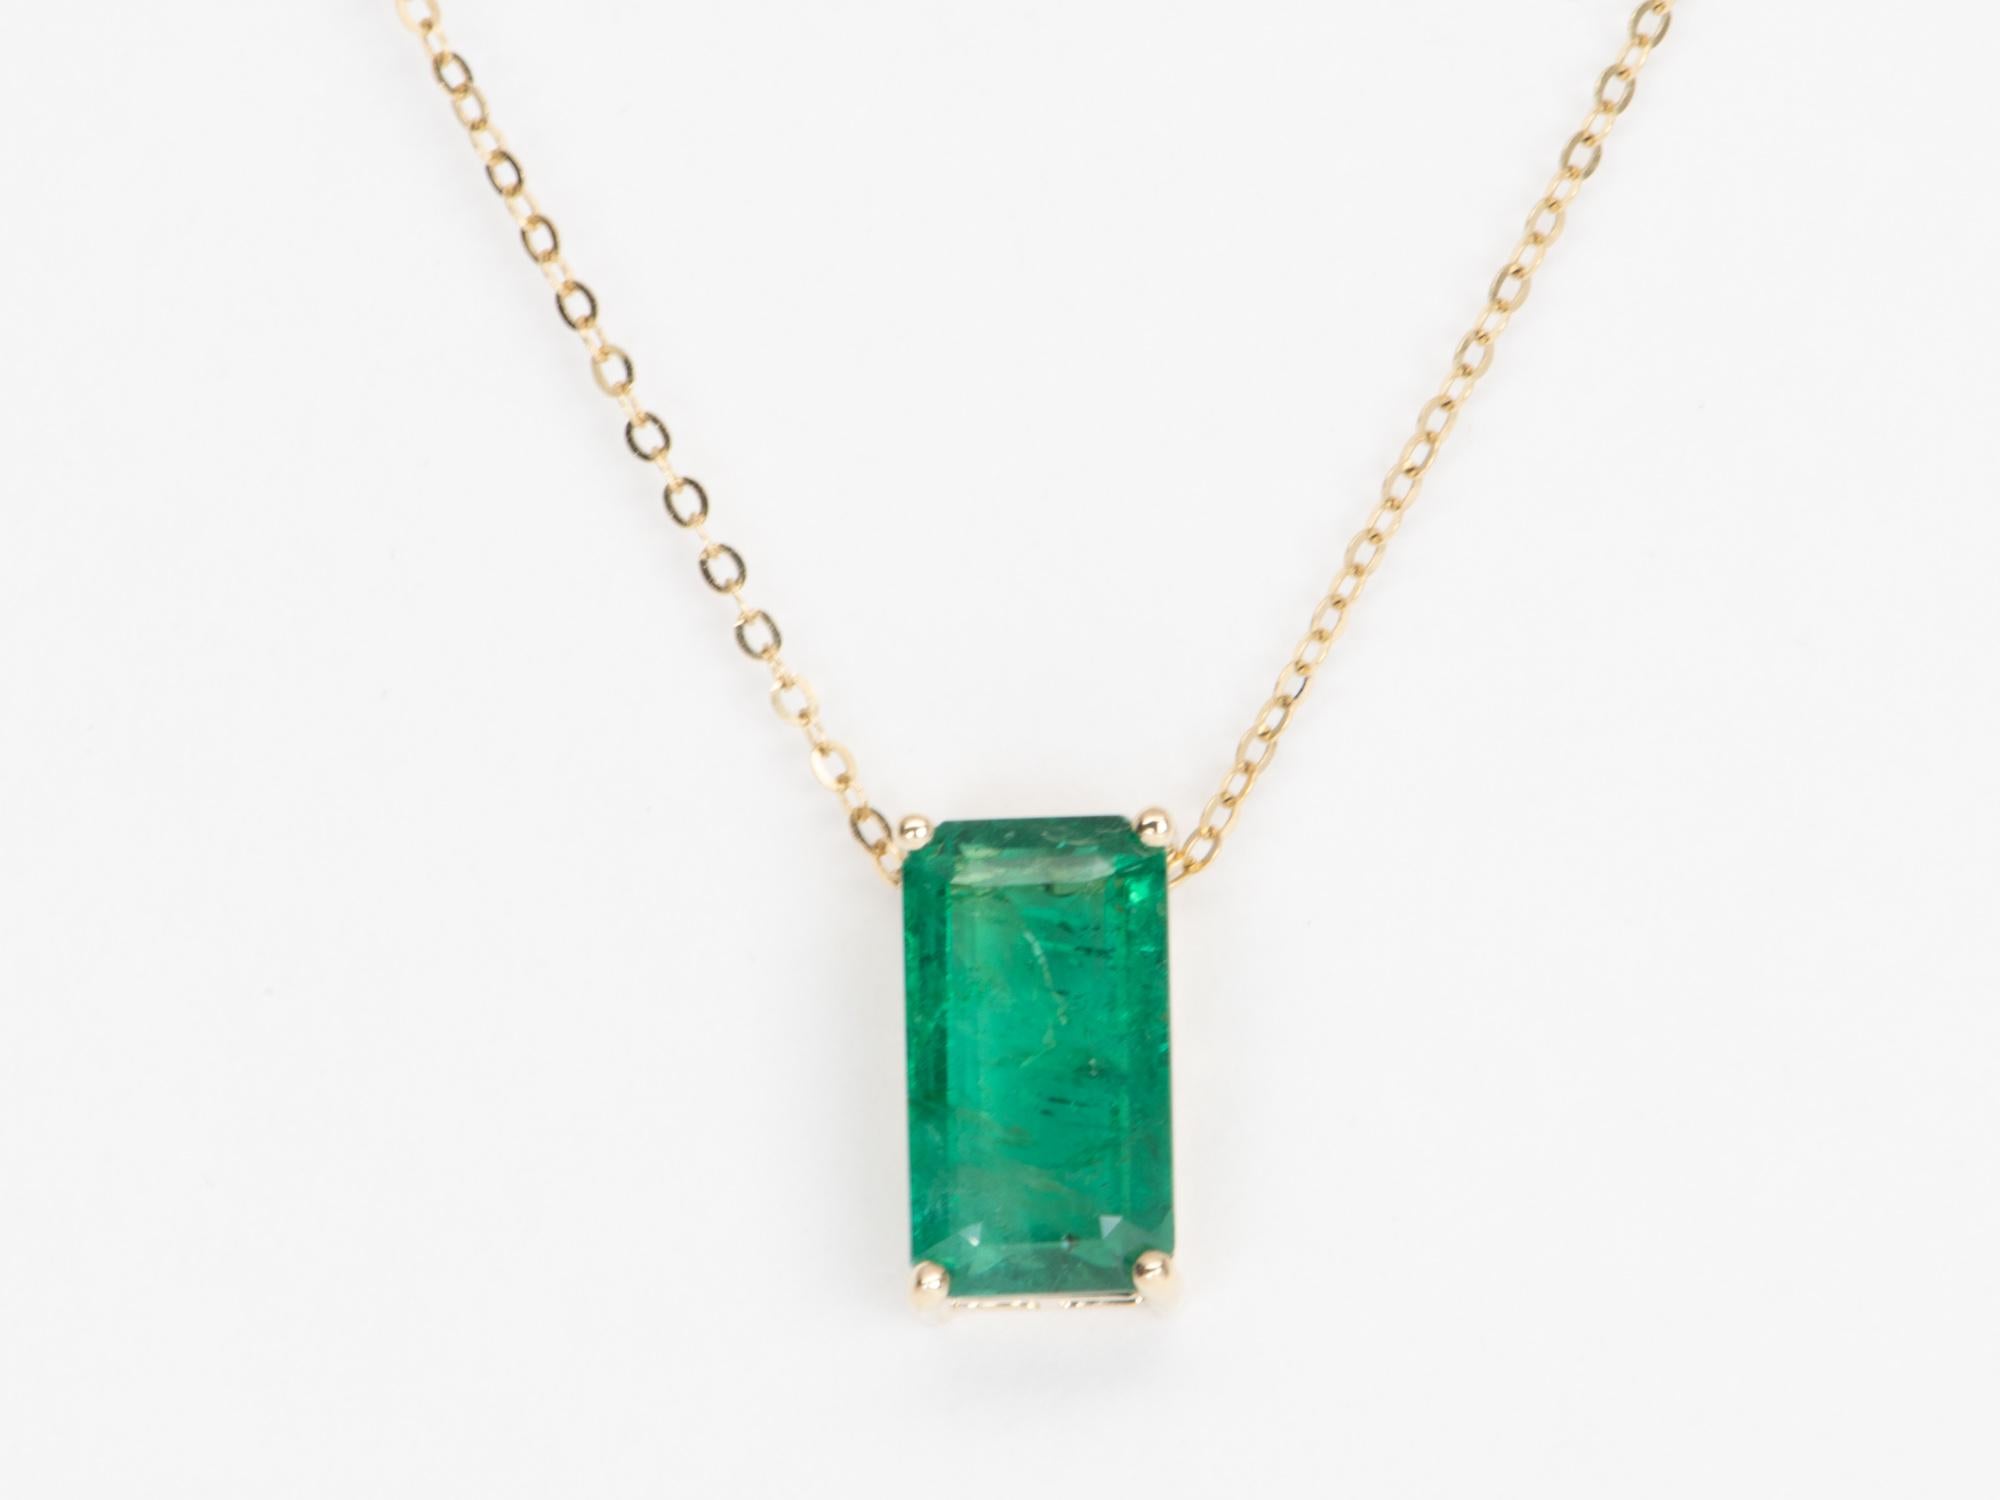 Emerald Cut 3.76ct Elongated Emerald Pendant Necklace 14K Gold Wear Multiple Ways R4471 For Sale